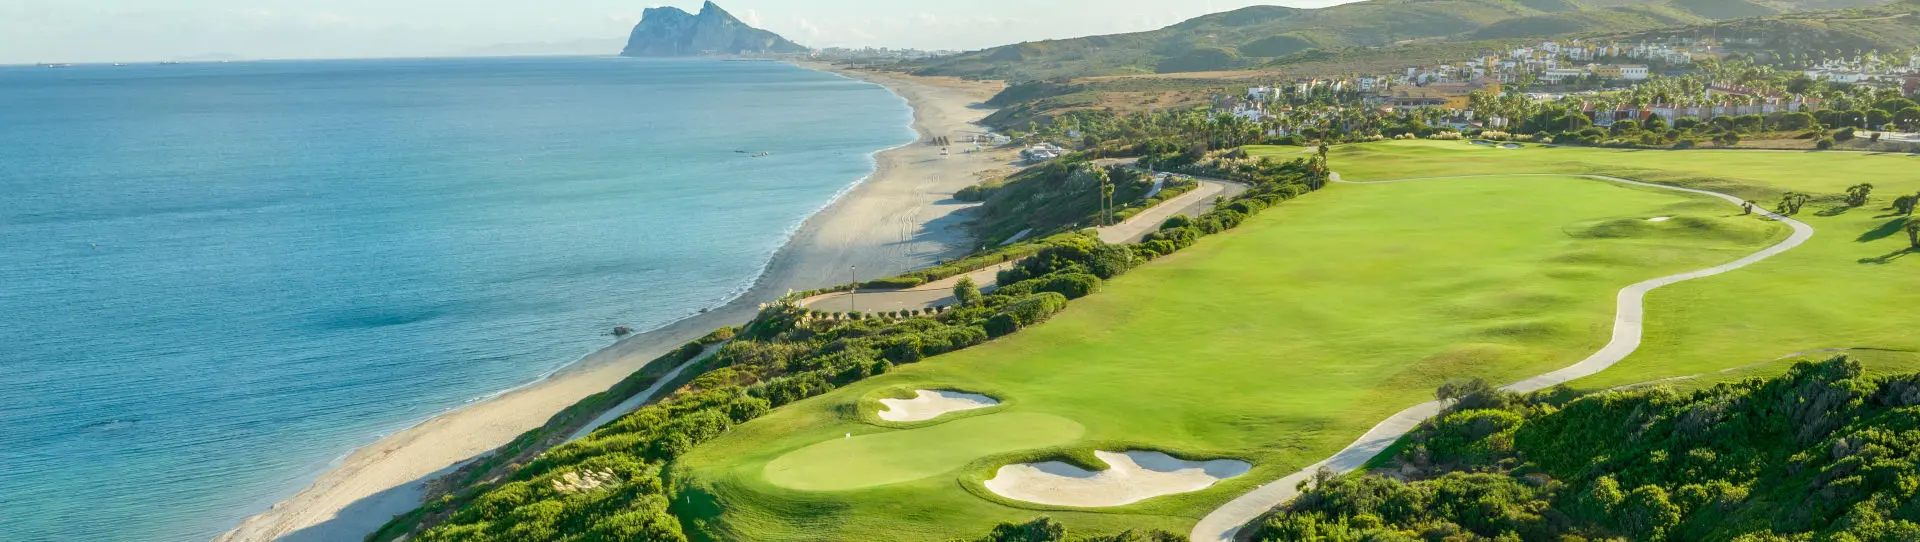 Spain golf holidays - La Hacienda Alcaidesa Golf Combo<br>Buggy Included - Photo 3